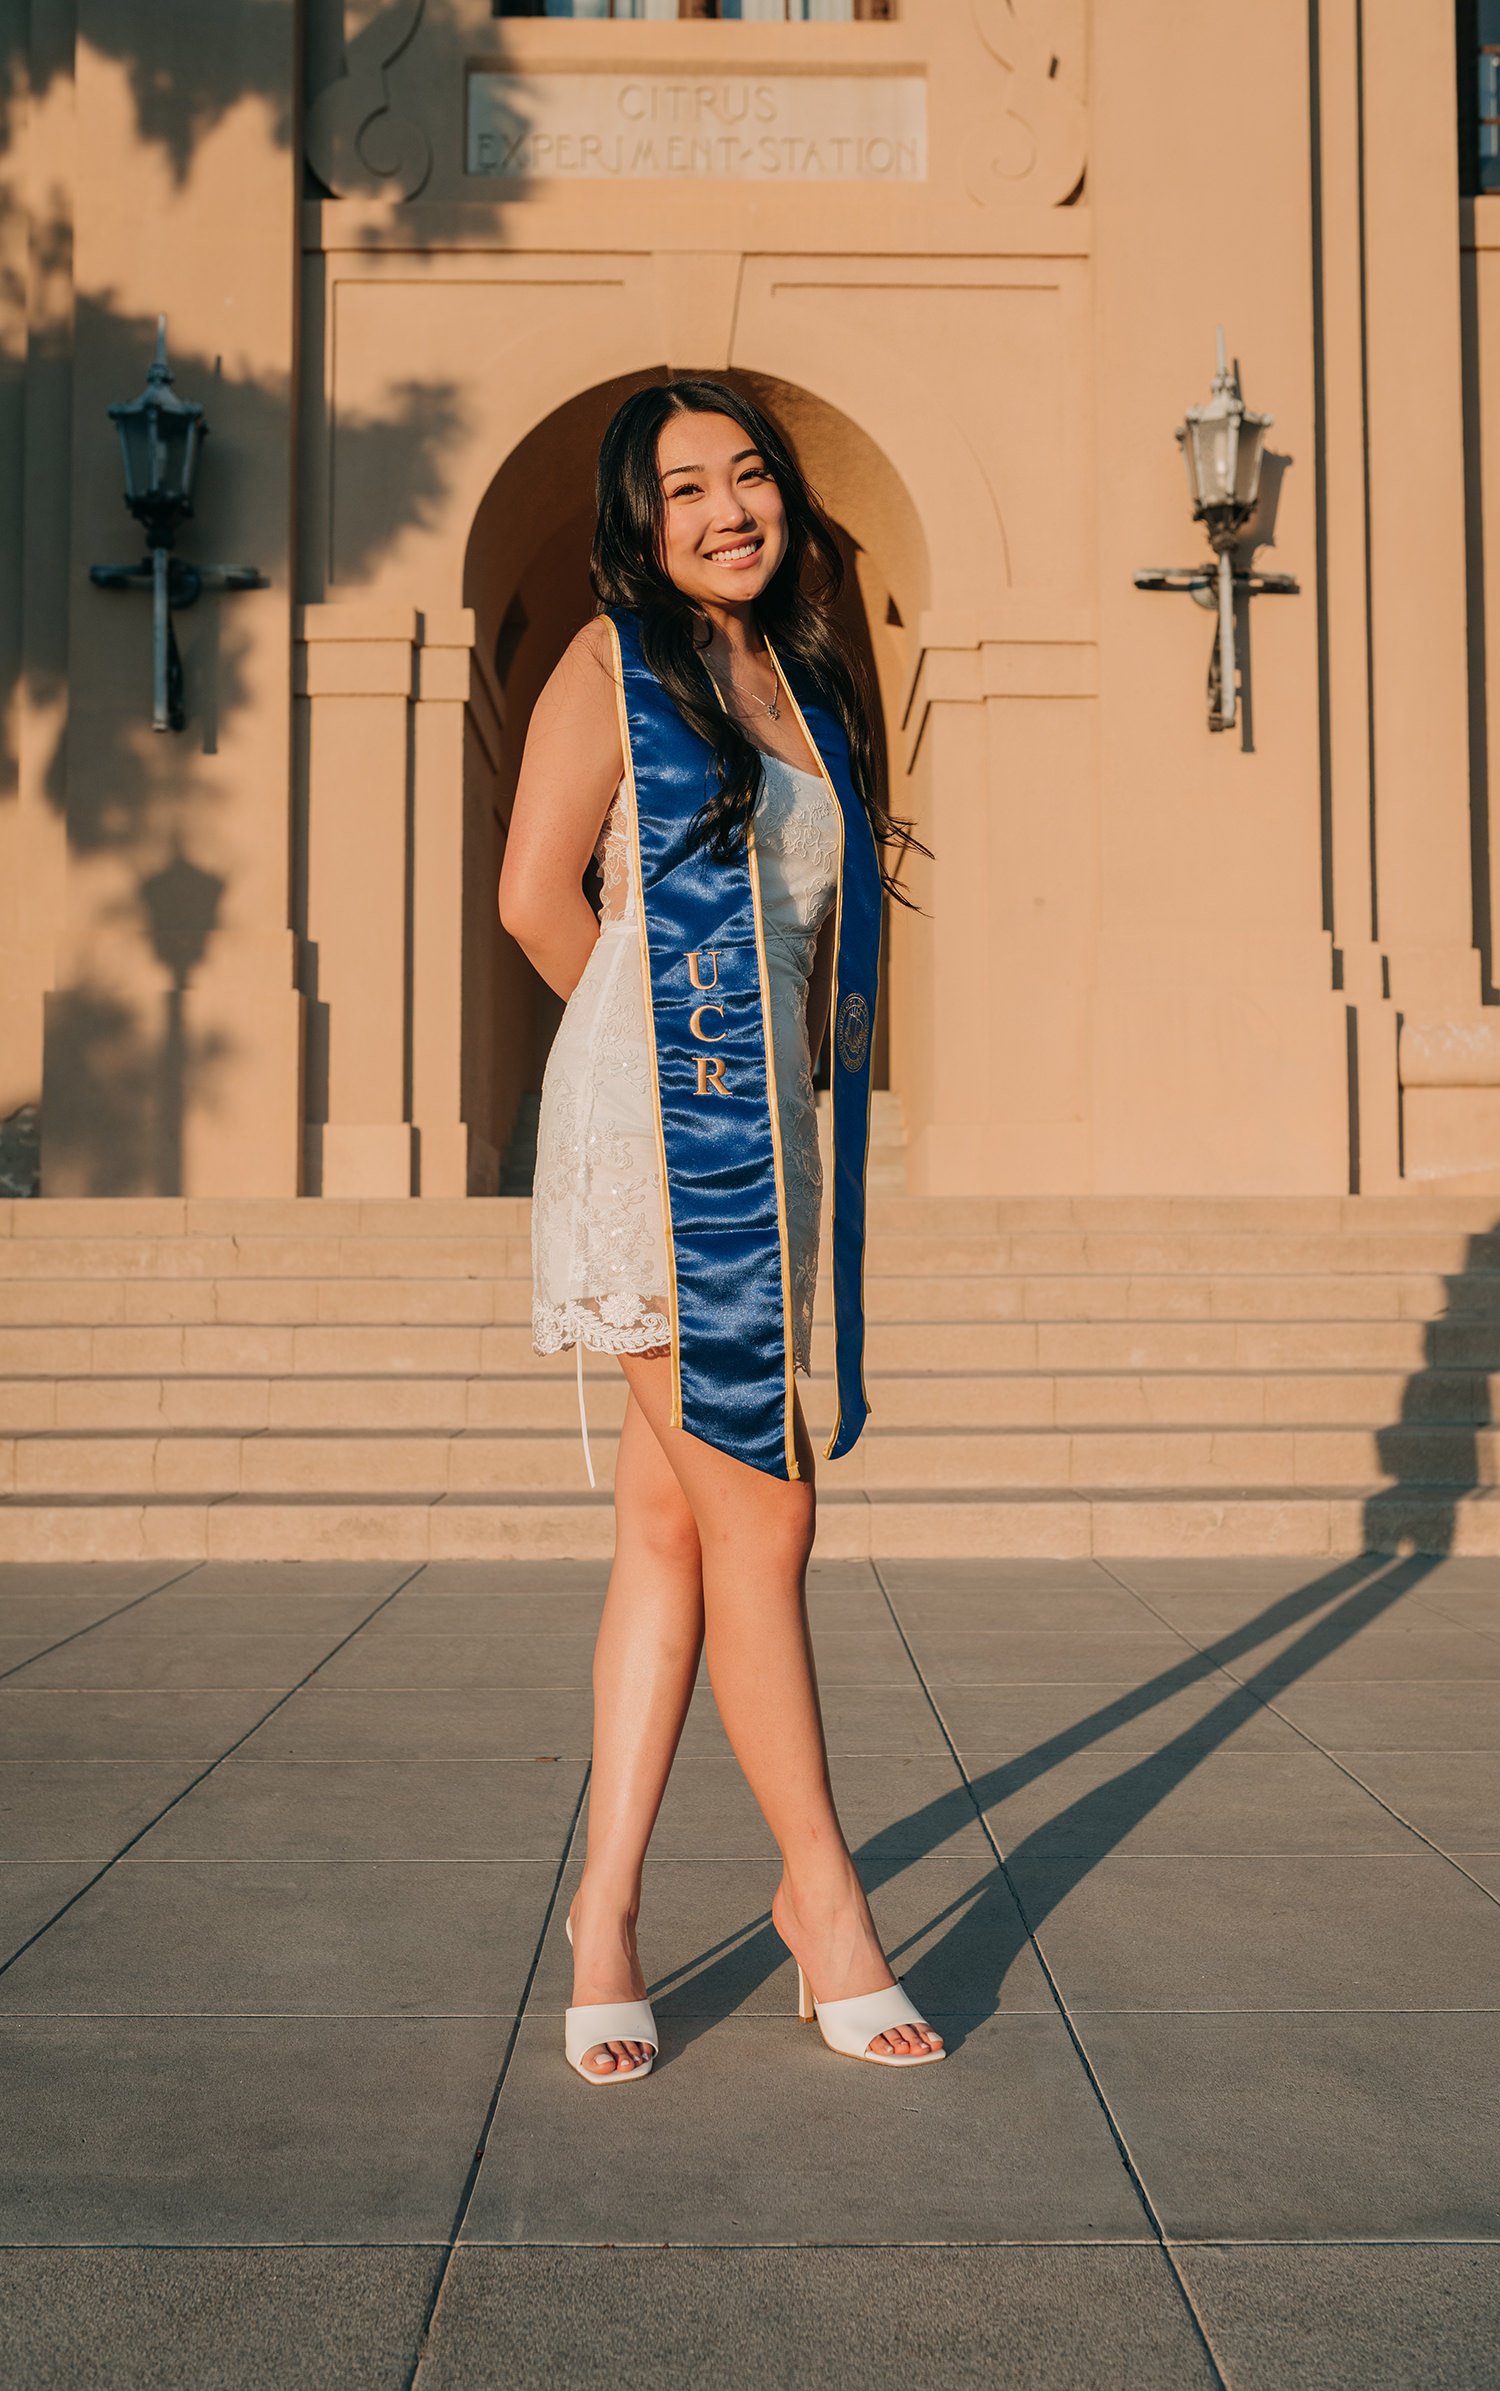 ucr-graduation-portrait-riverside-california-photographer-32.jpg